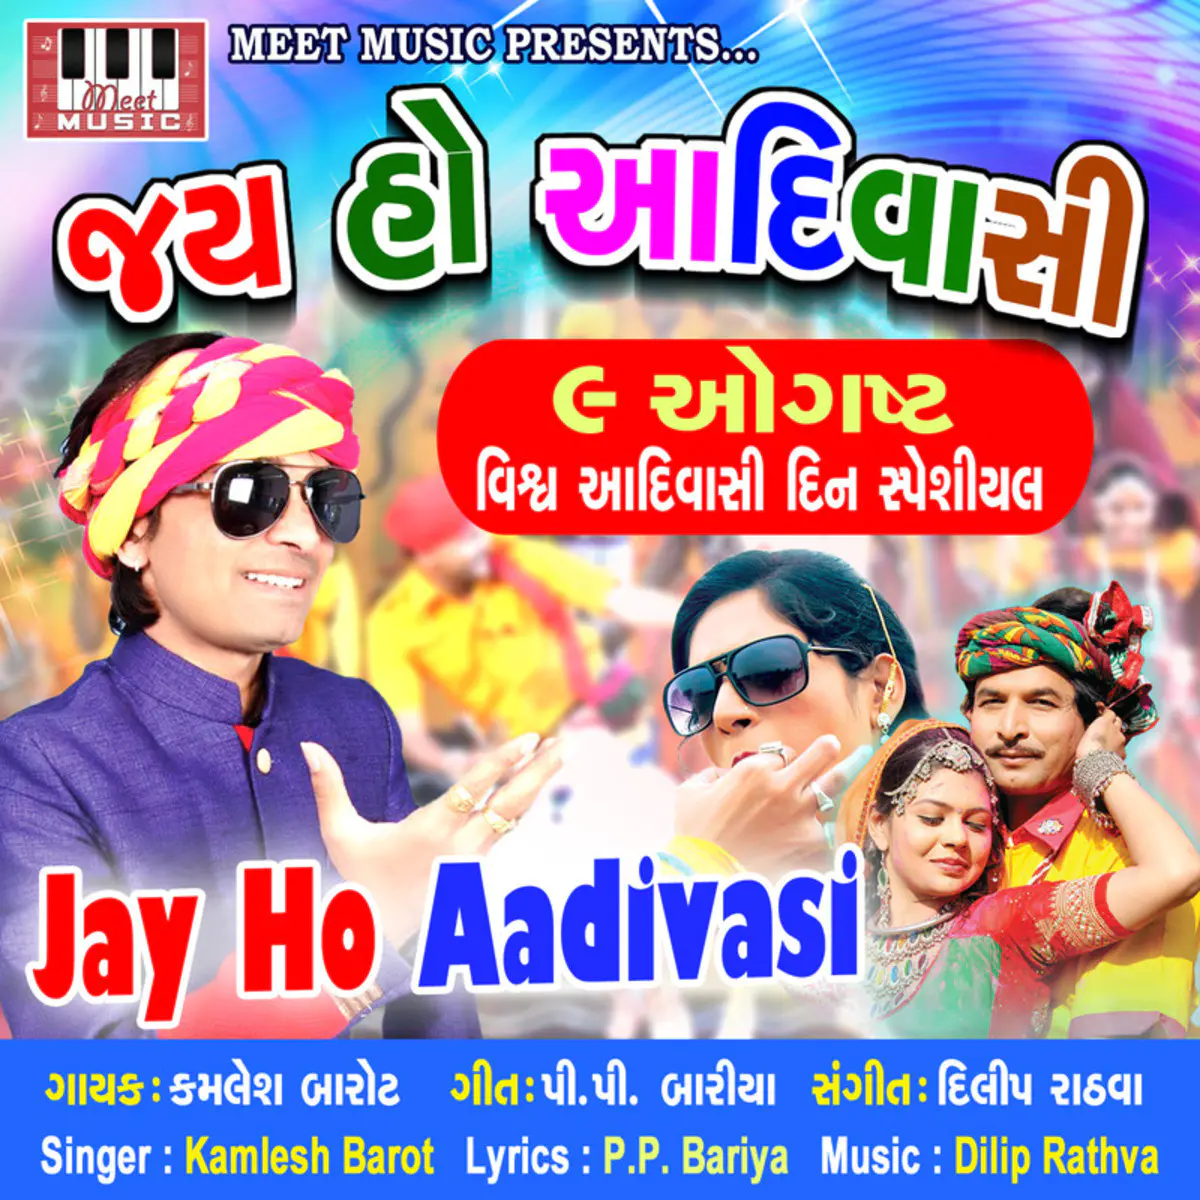 Jay Ho Adivasi Song Download Jay Ho Adivasi Mp3 Gujarati Song Online Free On Gaana Com If you appreciate sara's work, please consider getting a membership at her official website. jay ho adivasi mp3 gujarati song